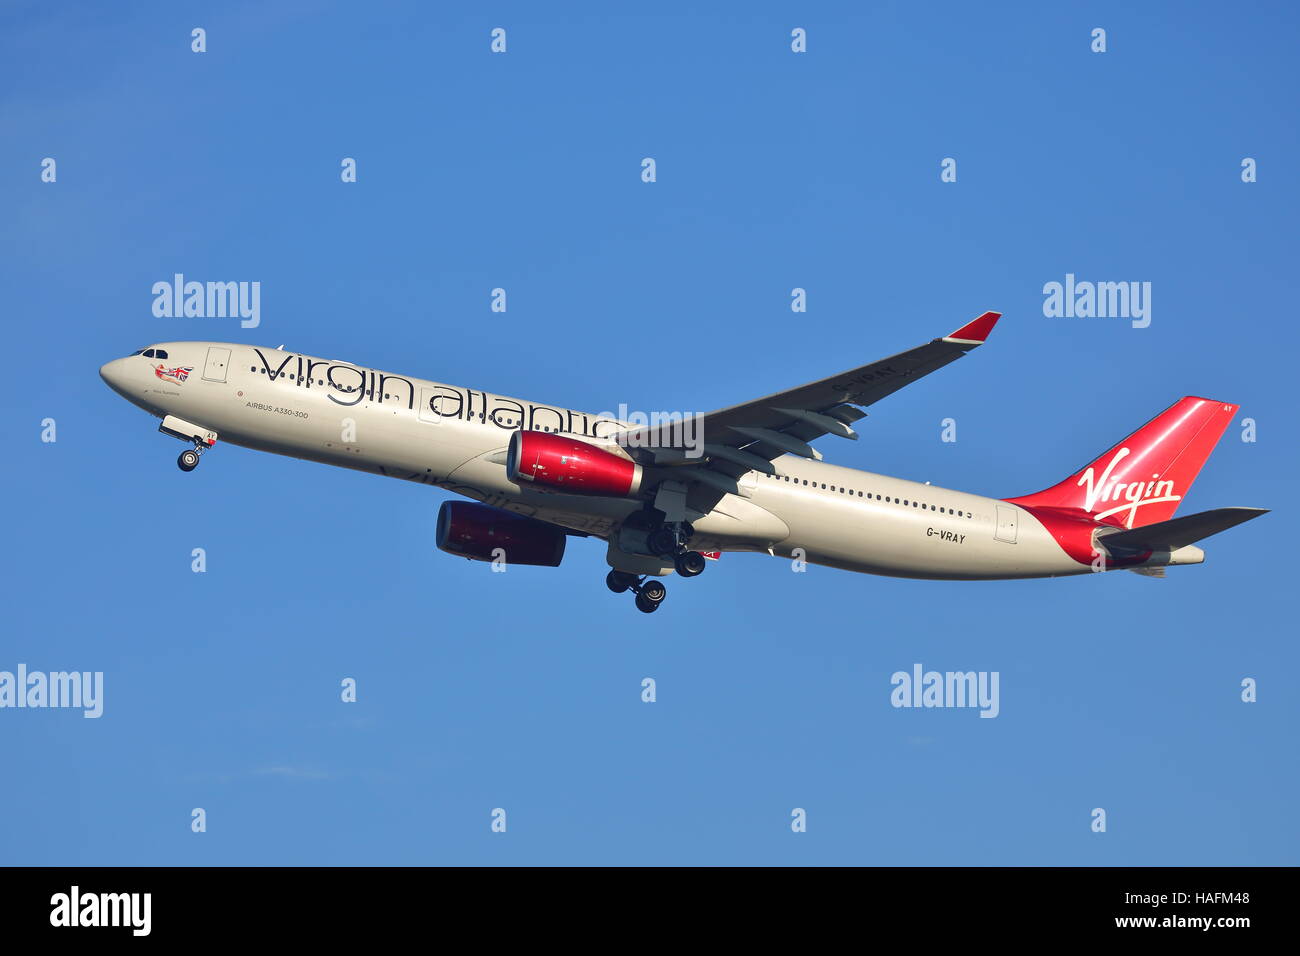 Virgin Atlantic Airbus 330-300 G-VRAY departing from London Heathrow Airport, UK Stock Photo